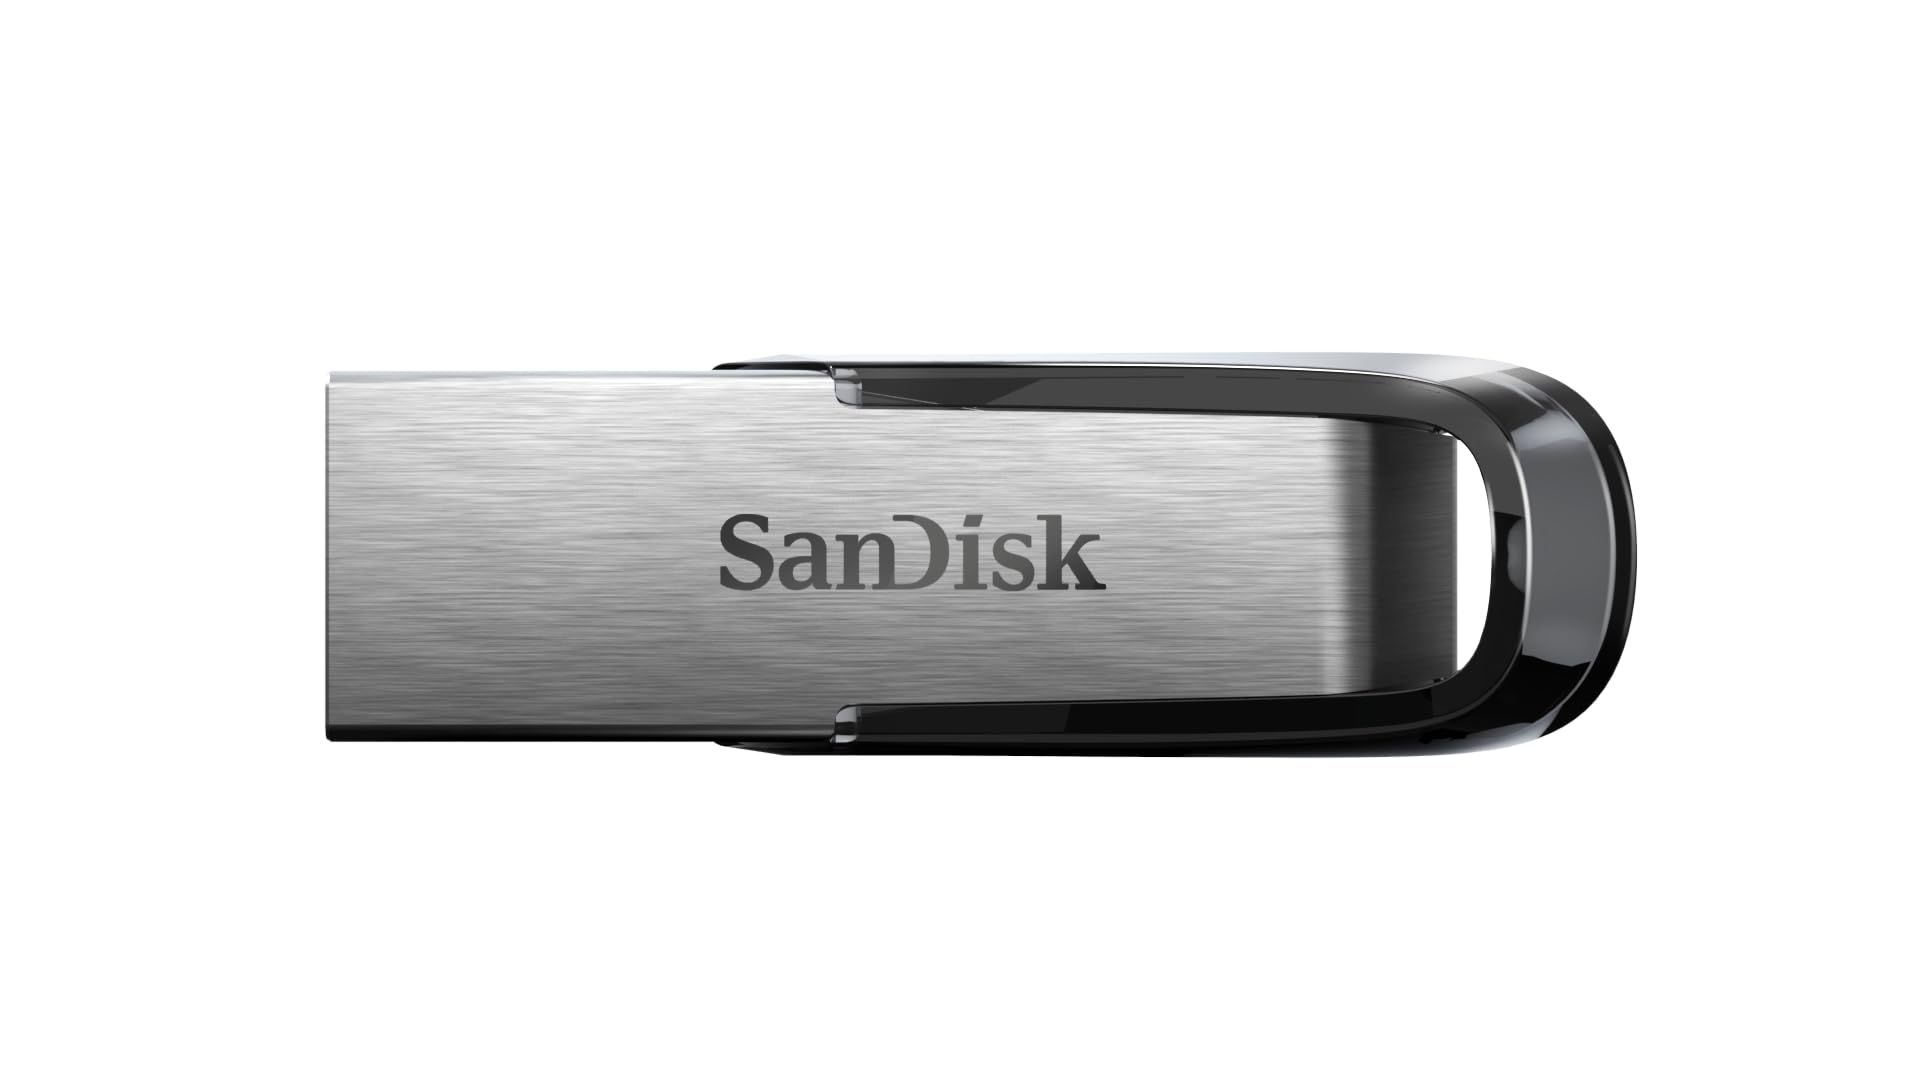 SanDisk 64GB Ultra Flair USB 3.0 Flash Drive -  SDCZ73-064G-G46